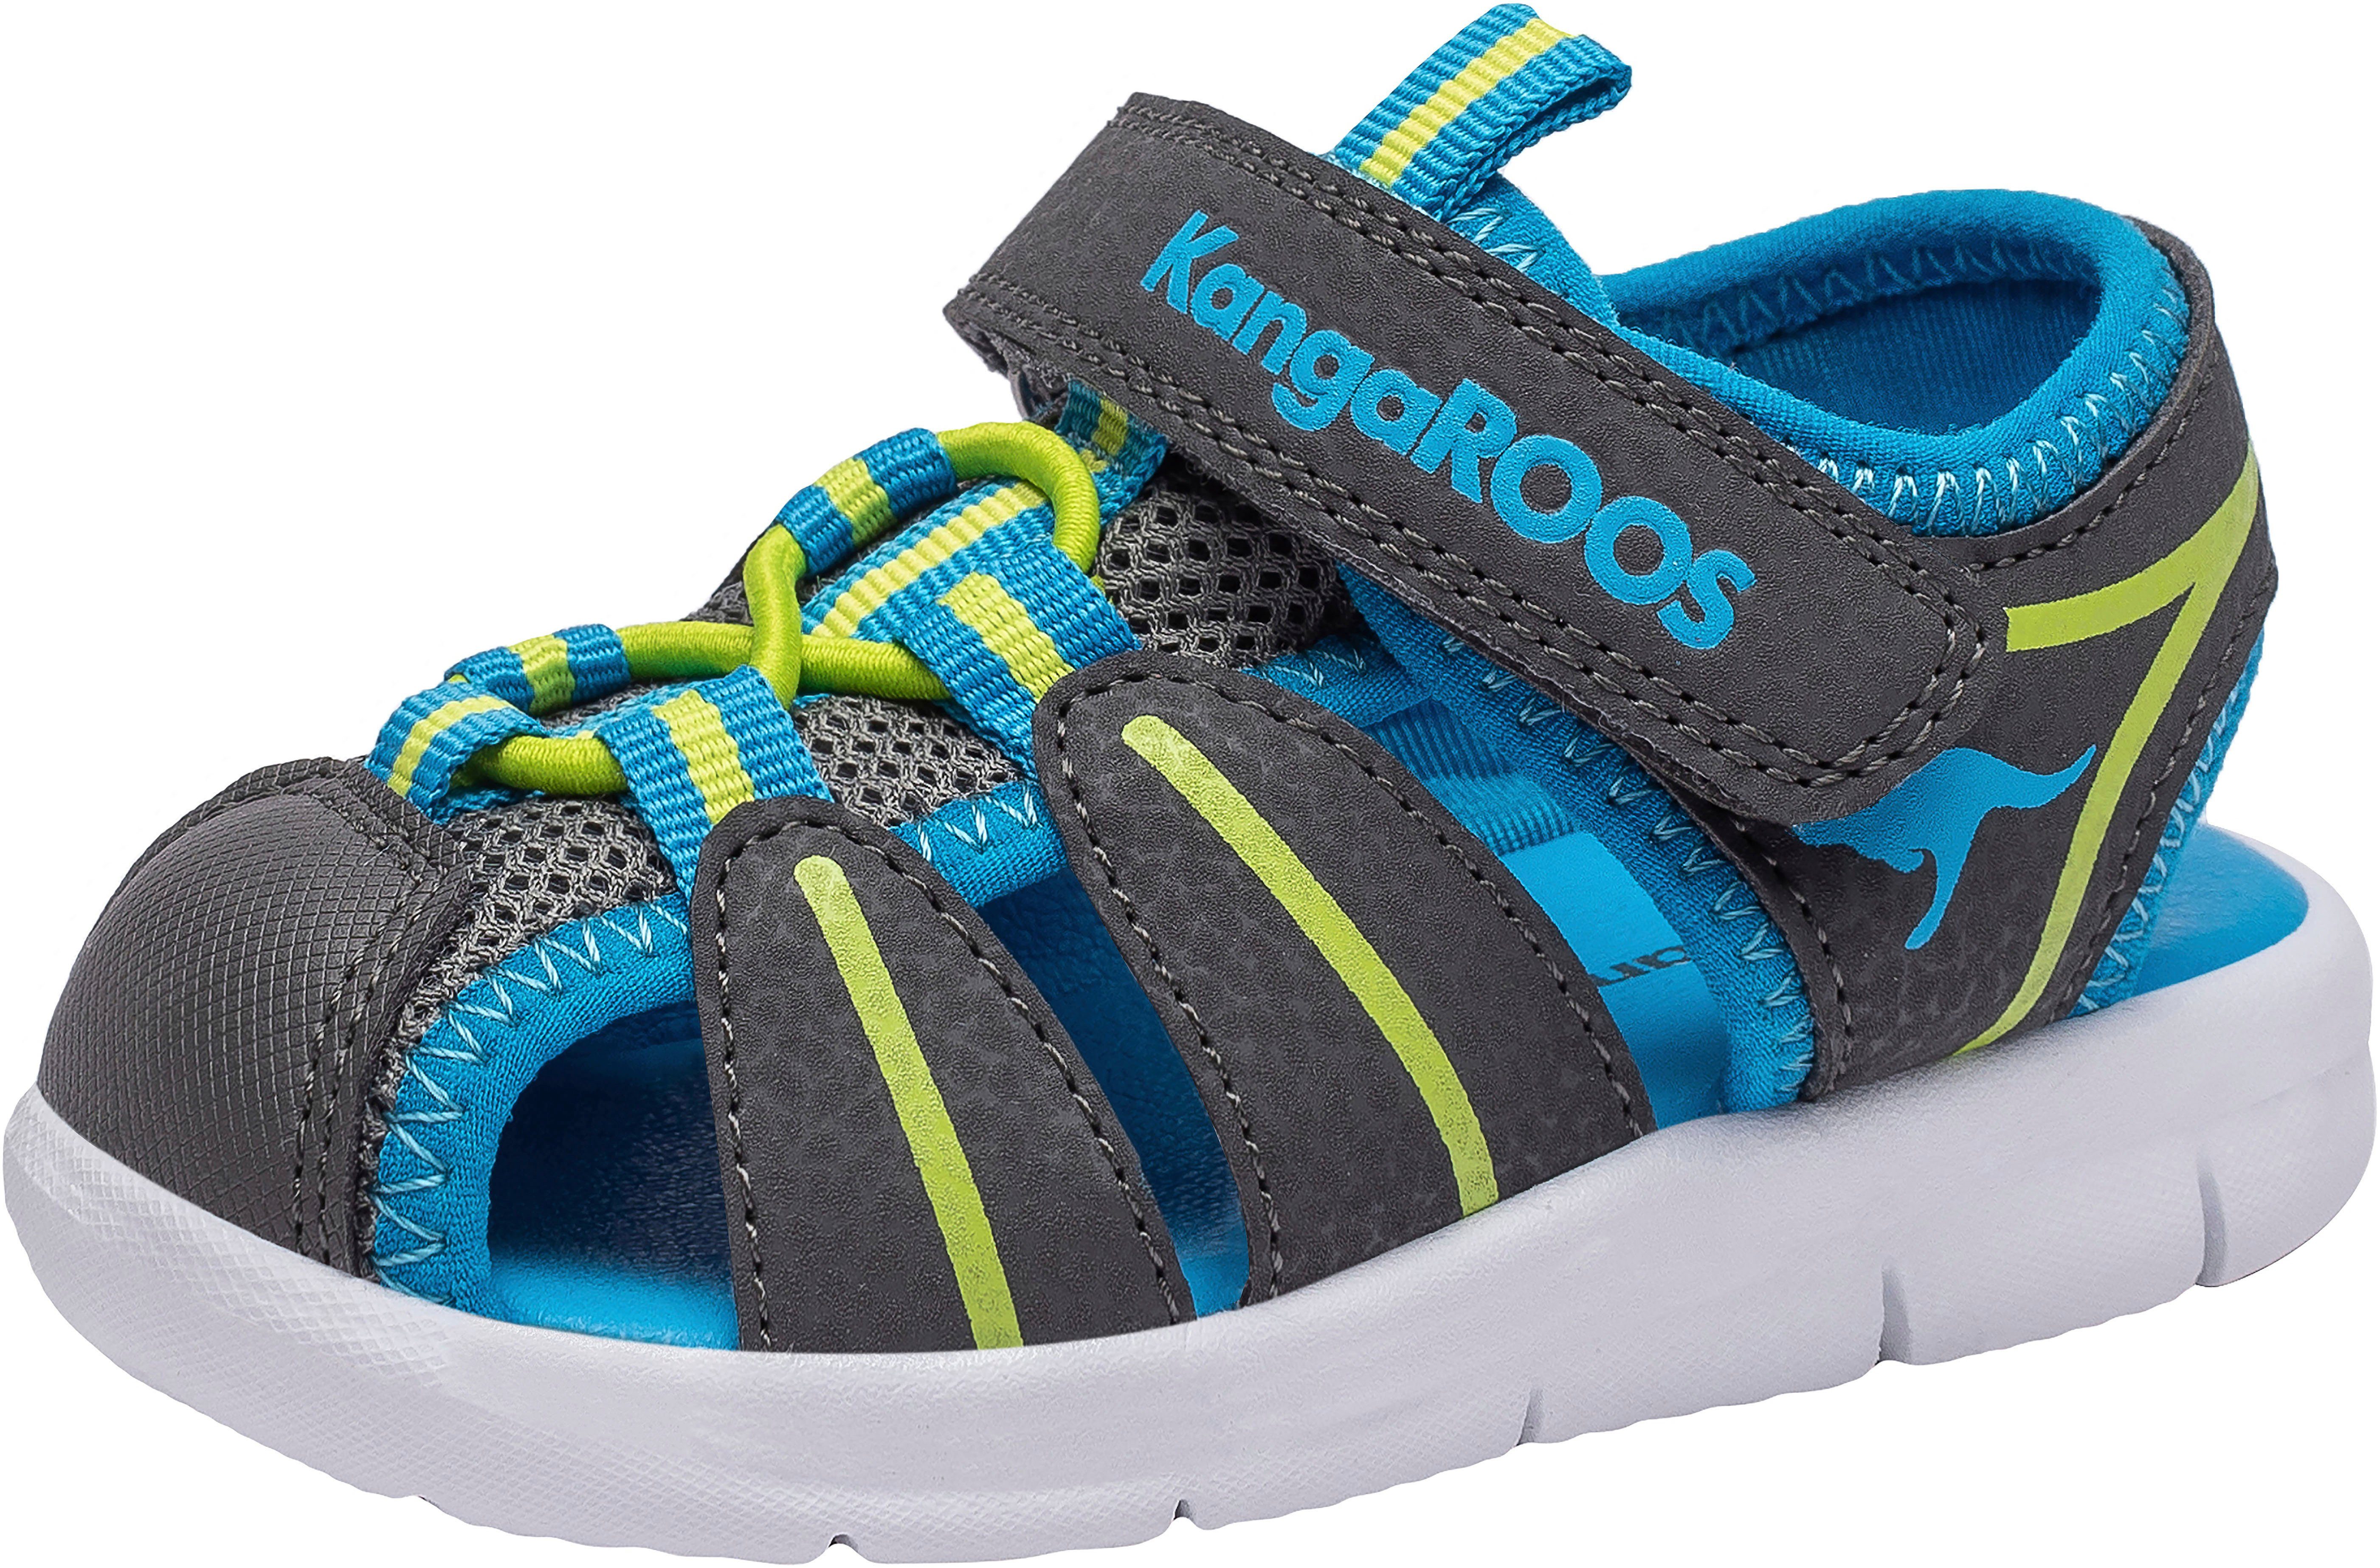 KangaROOS K-Grobi Sandale Klettverschluss mit